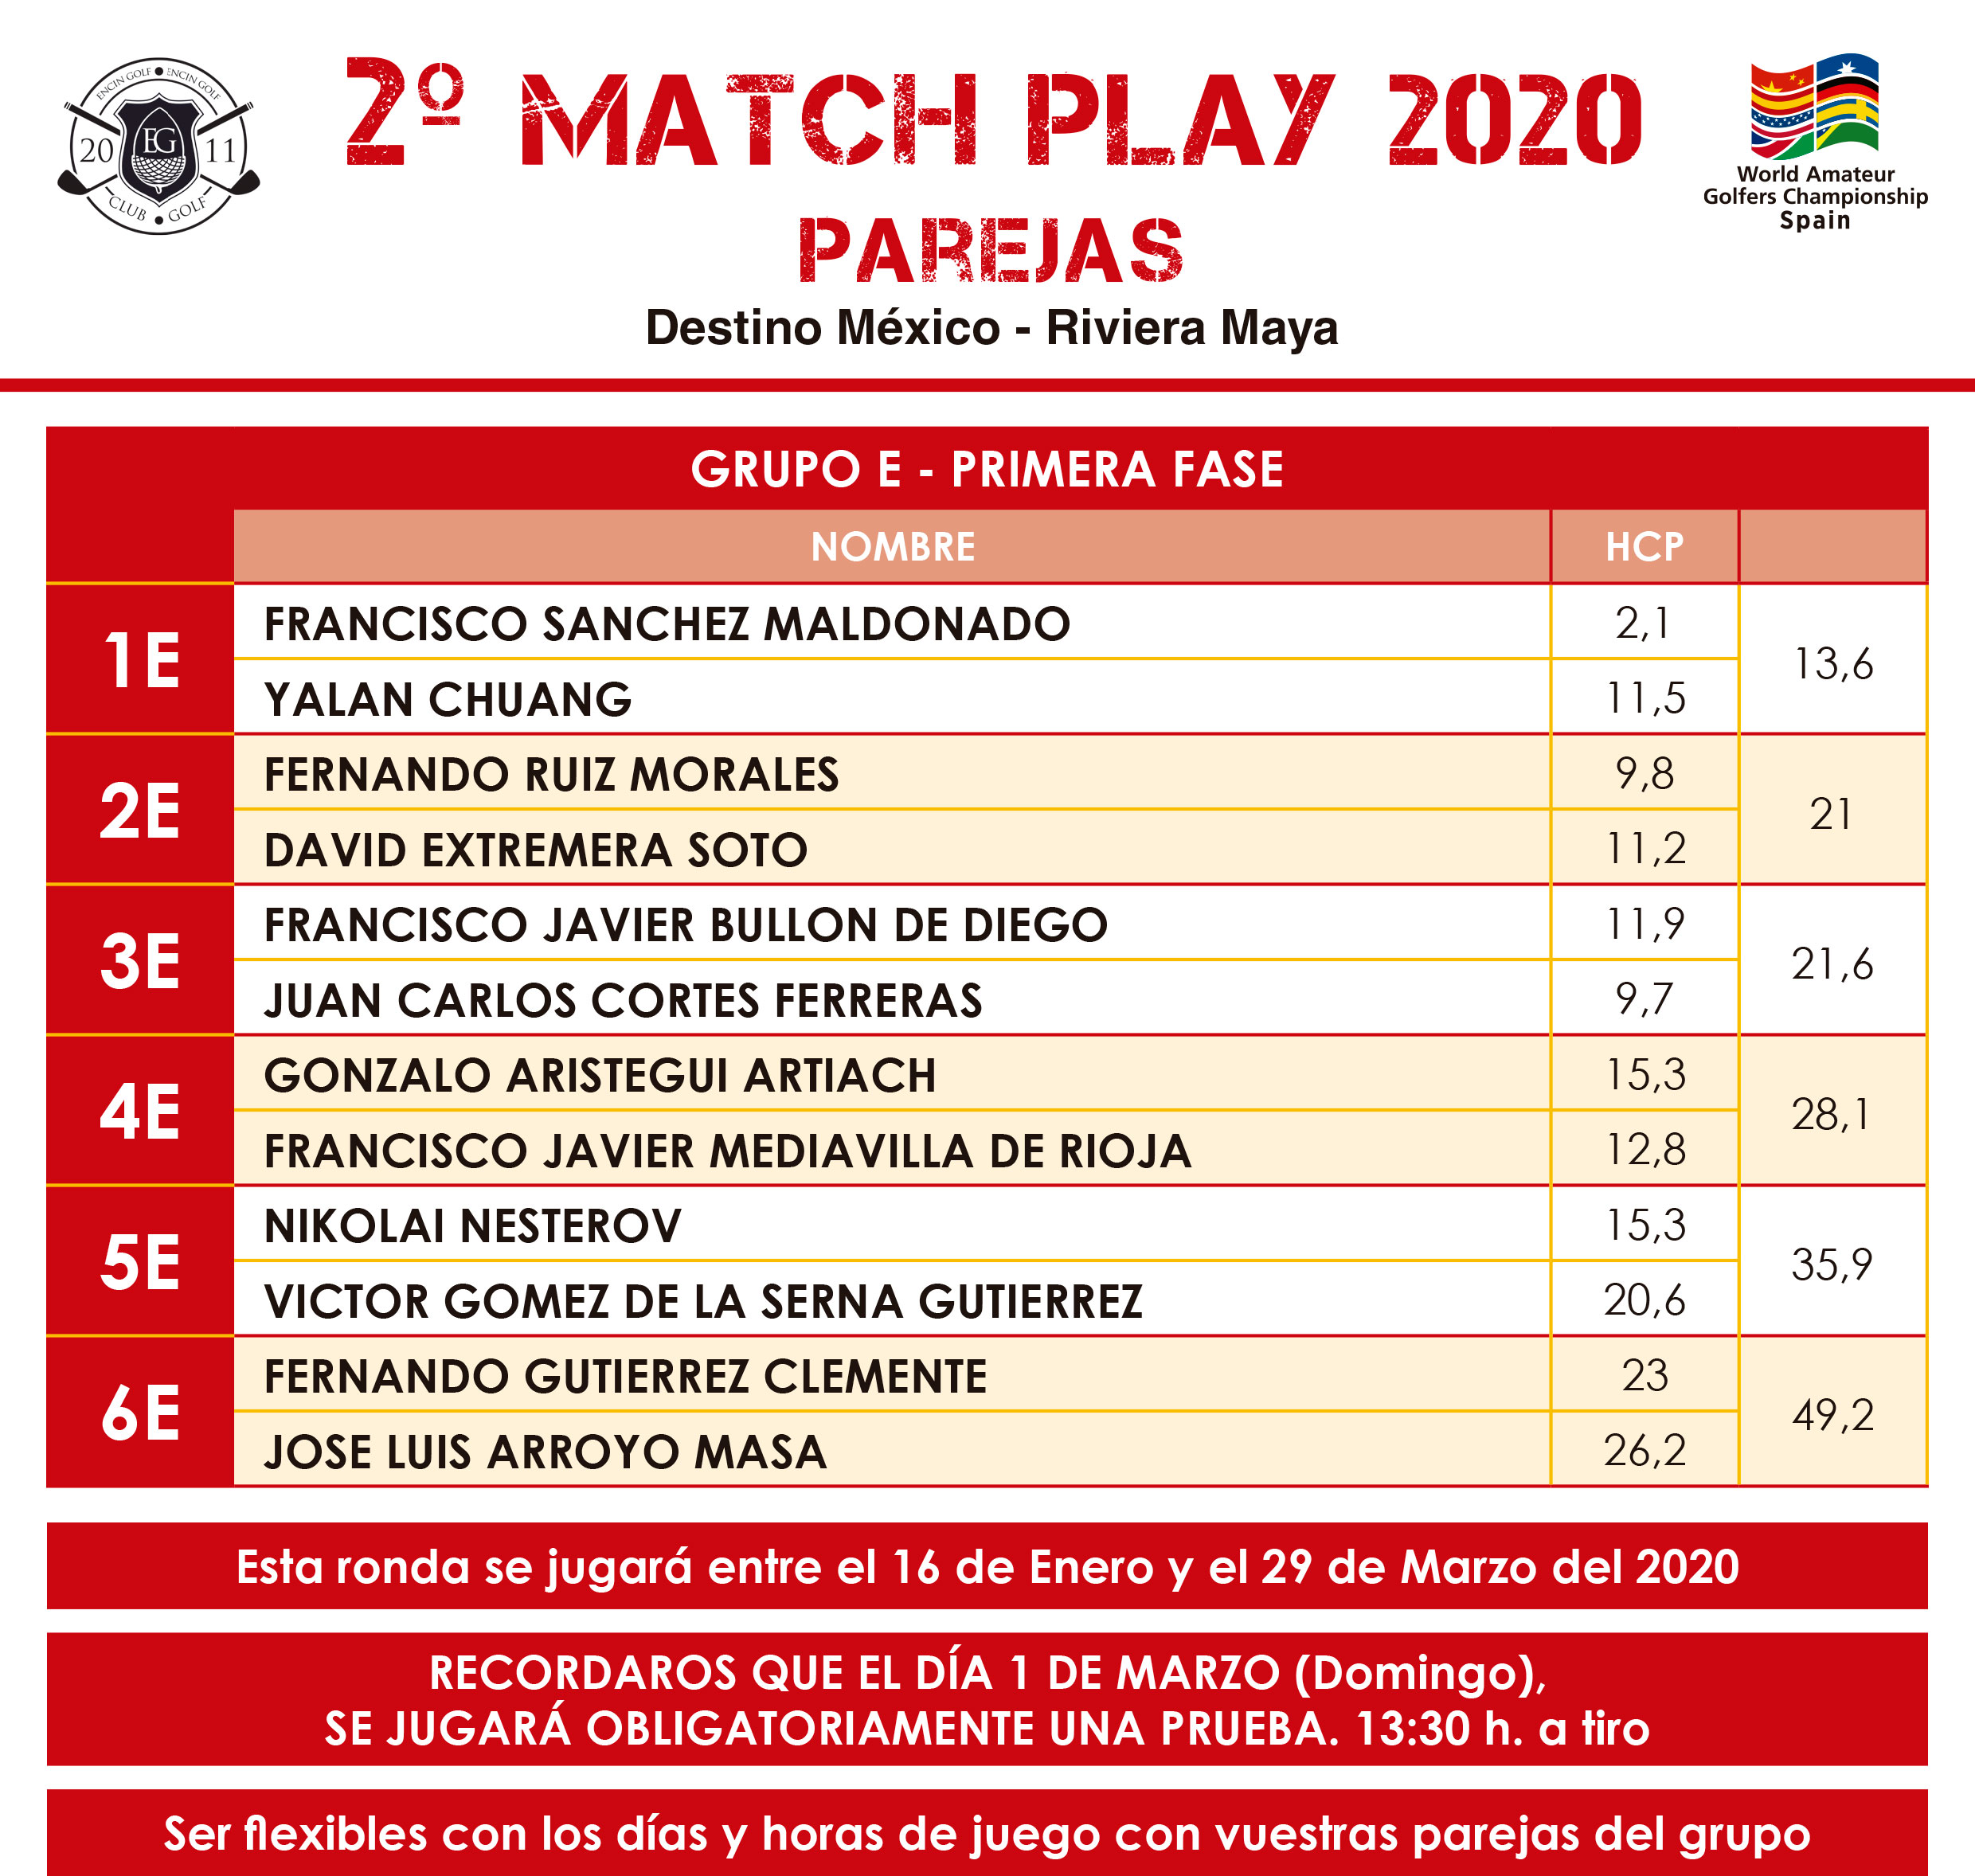 WAGC SPAIN - MATCH PLAY 2020 PAREJAS - 1ª FASE - GRUPO E